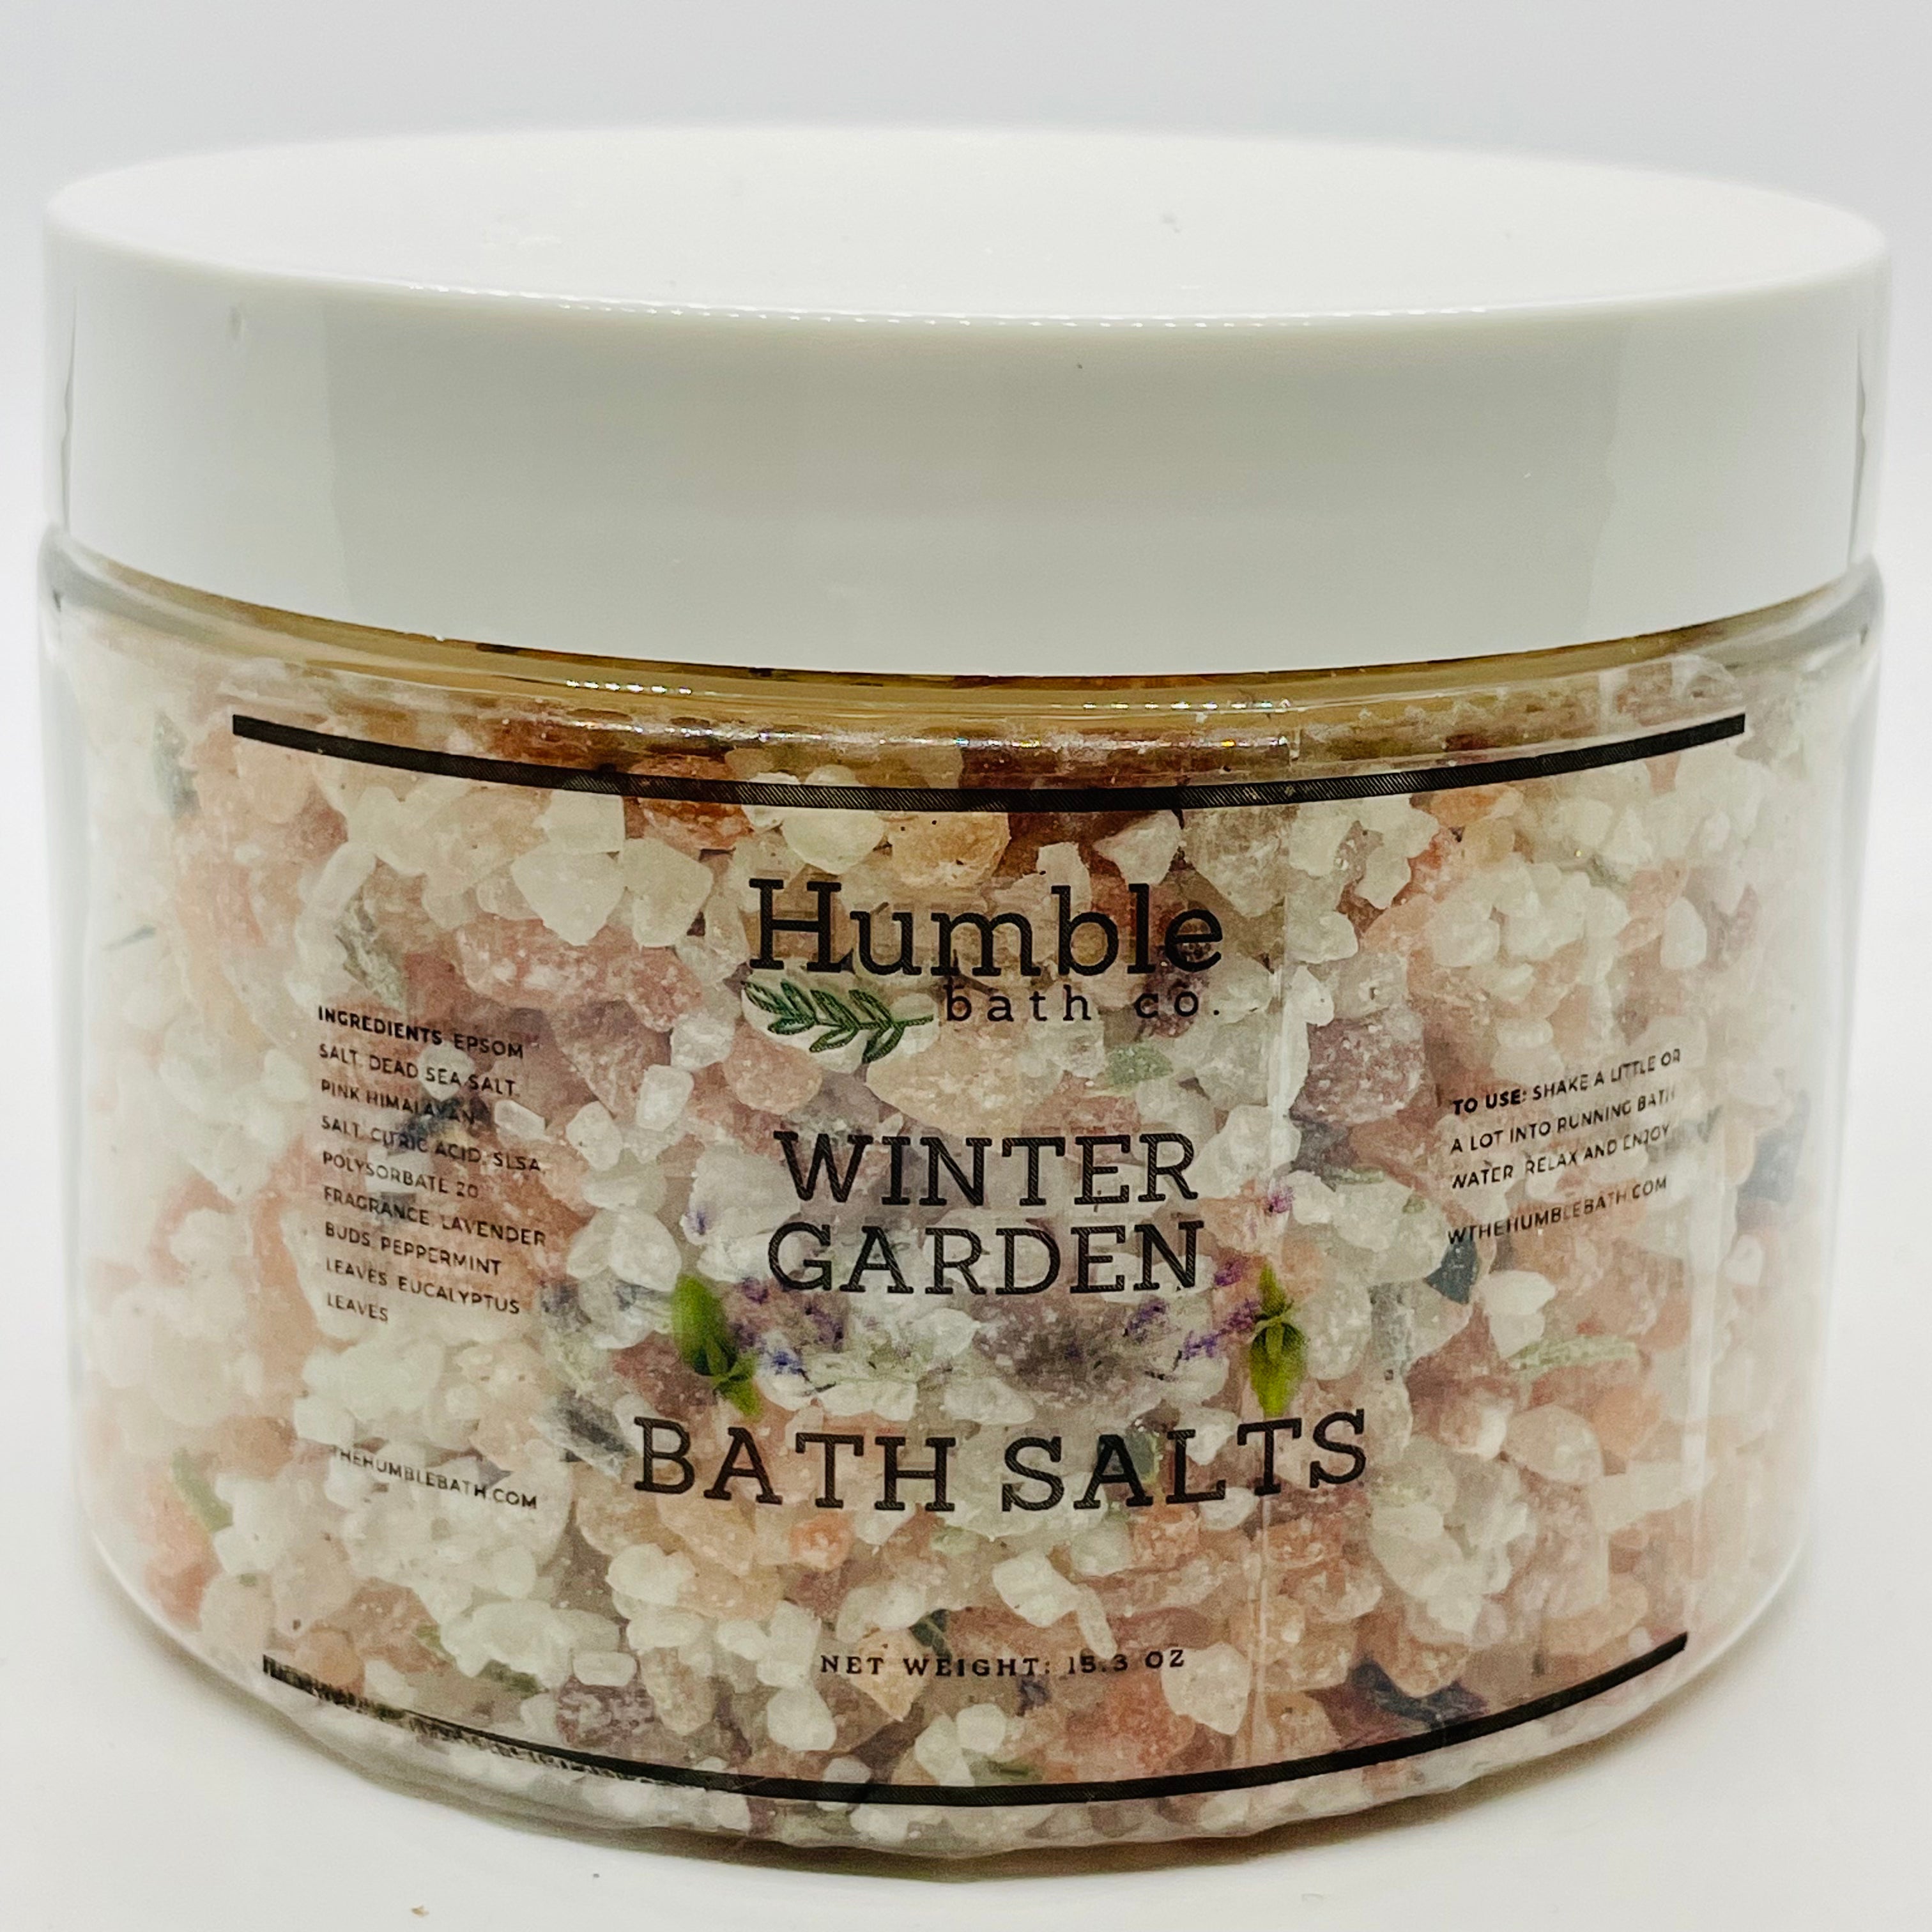 Winter Garden Bath Salts